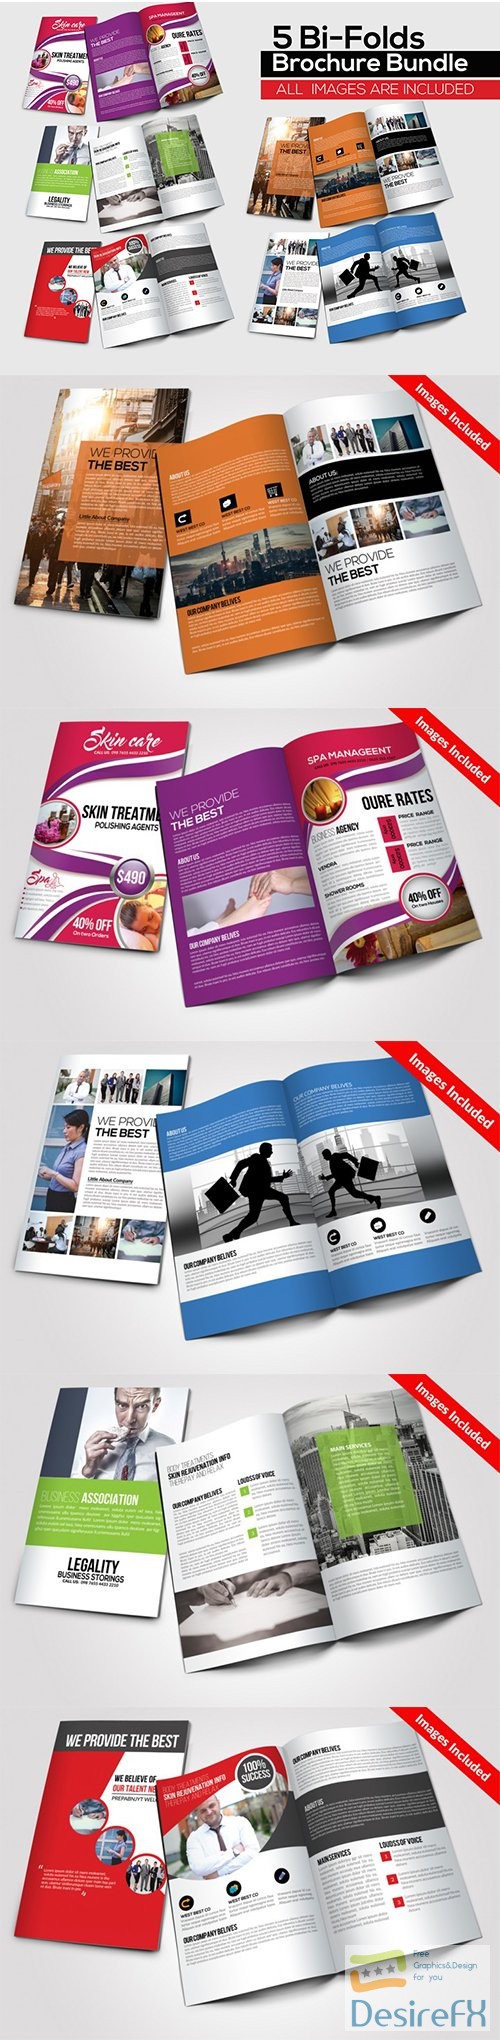 Download CM - 5 Business Multi Use Bi-fold Brochures Bundle - DesireFX.COM